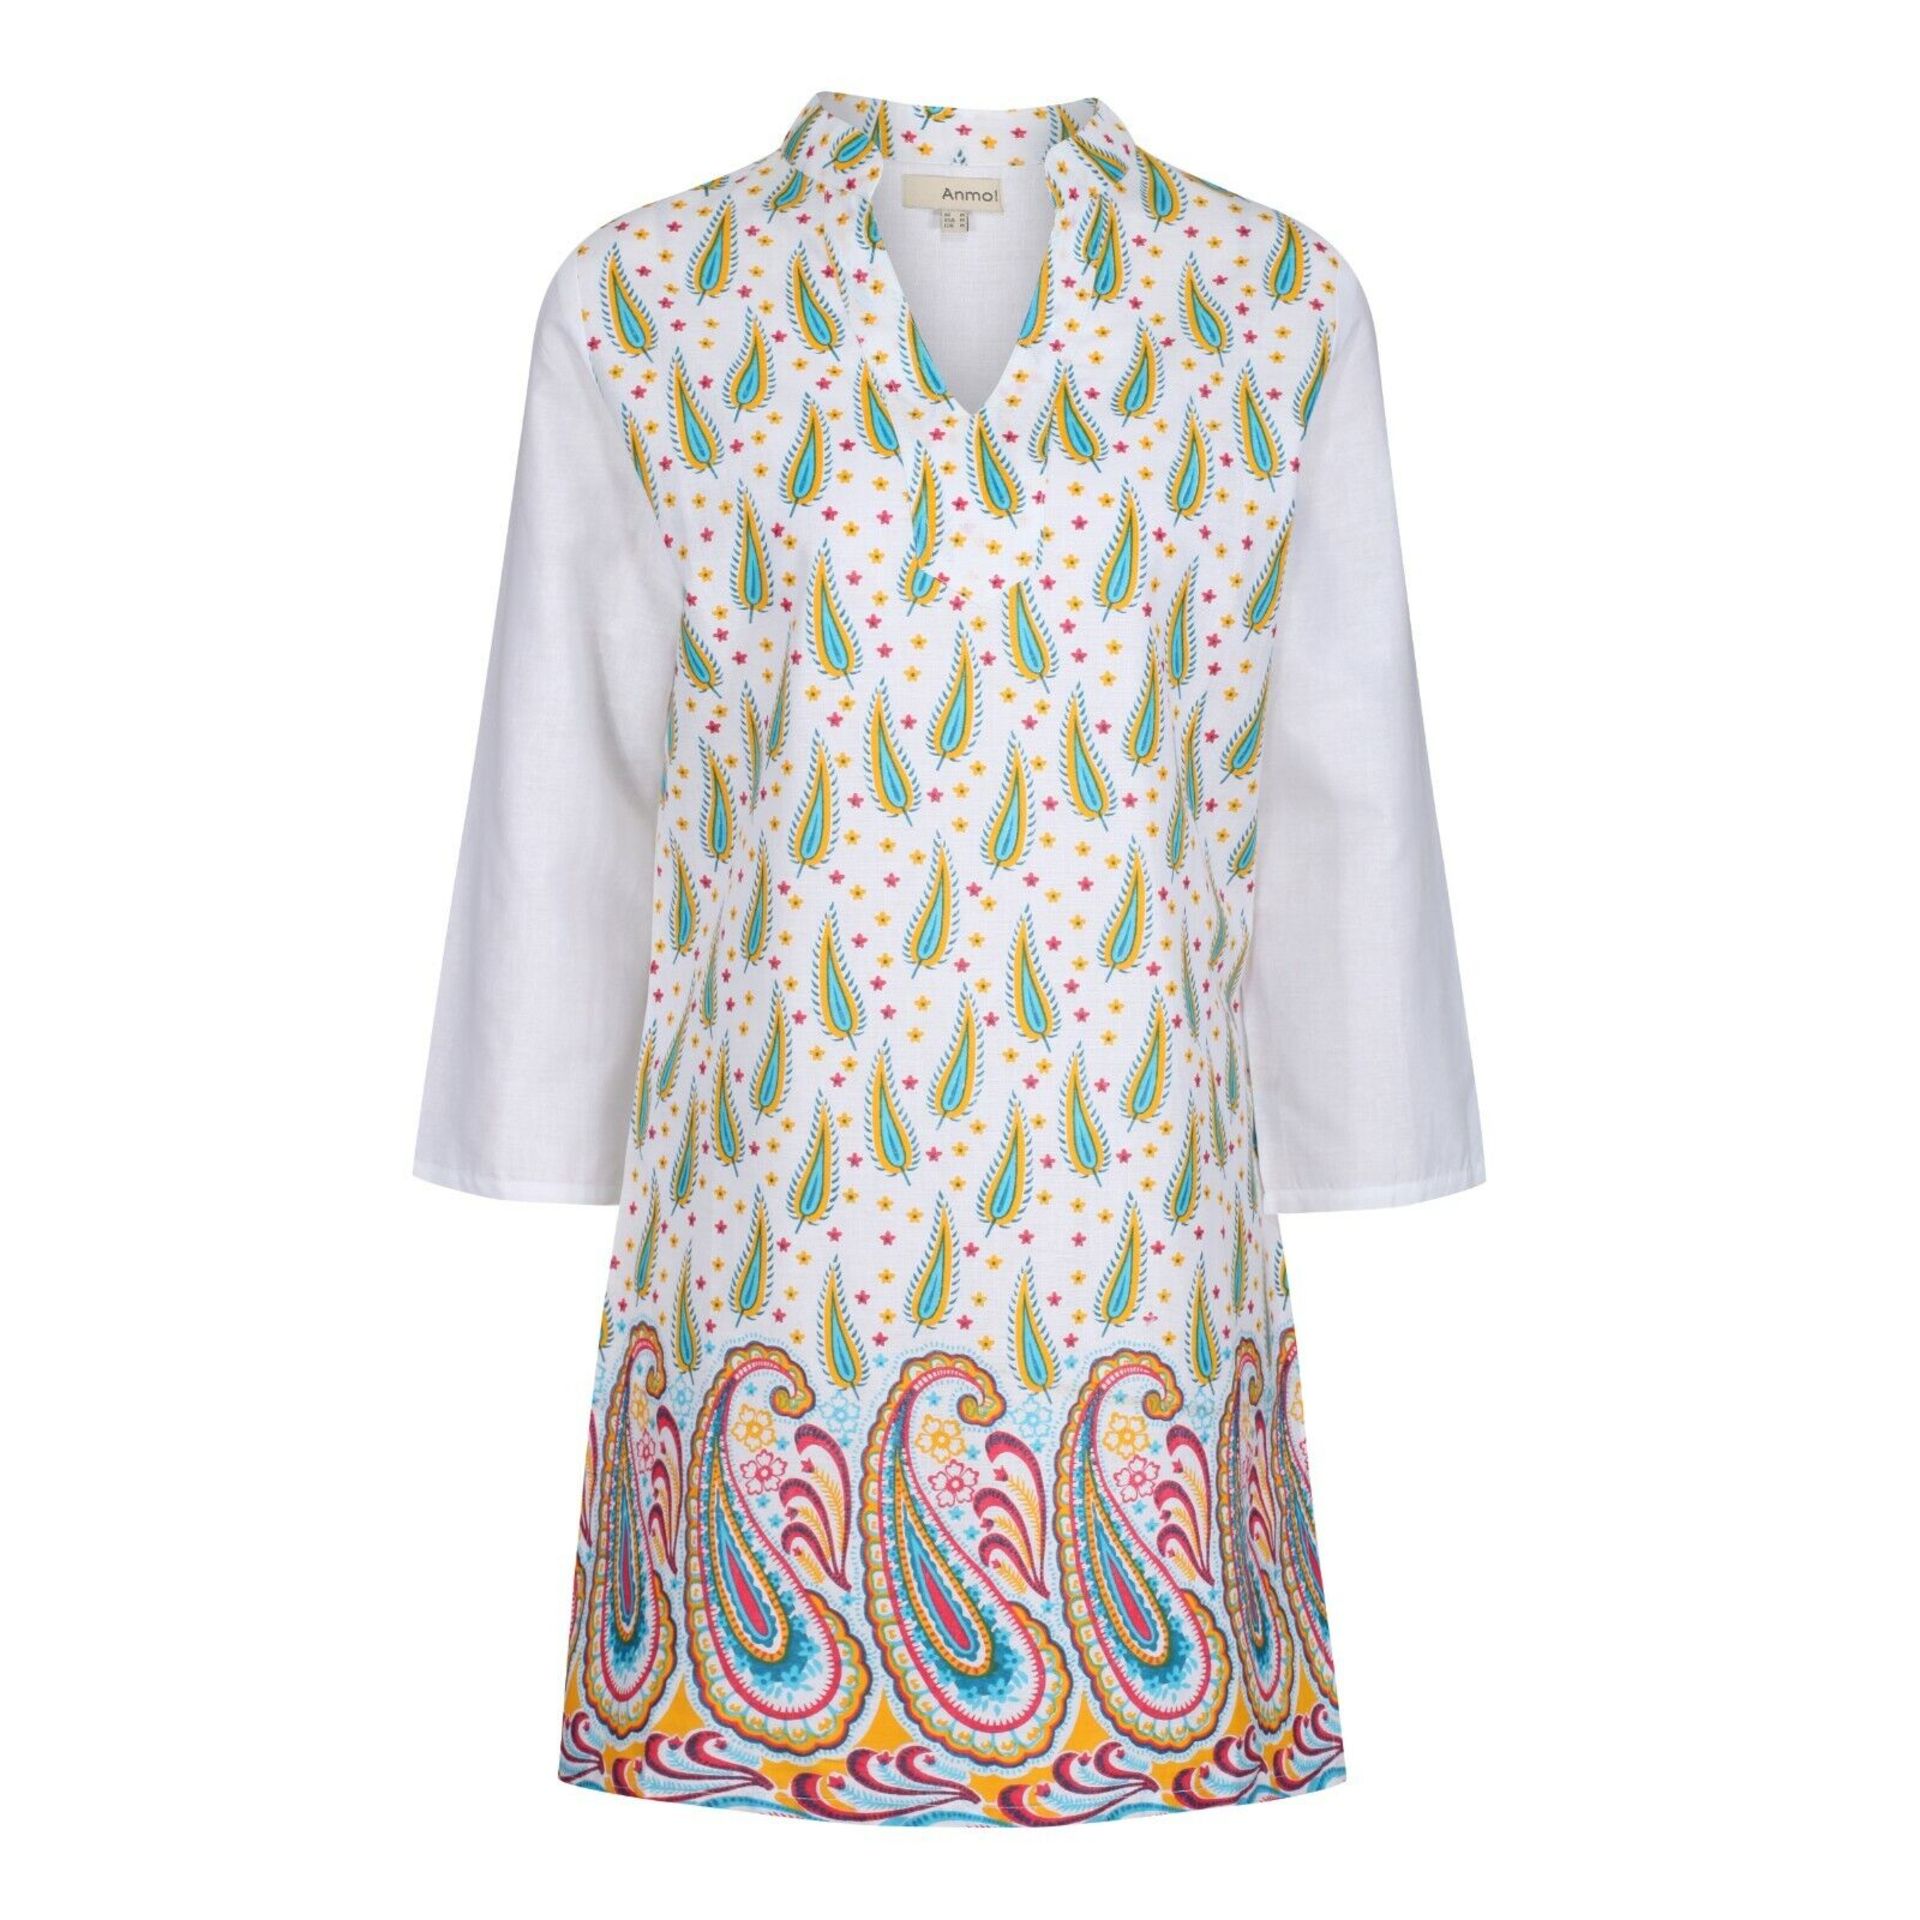 50 x New Women's Cotton Kaftan Tunics Summer Ladieswear Clothing Clothes Fashion - Image 7 of 7